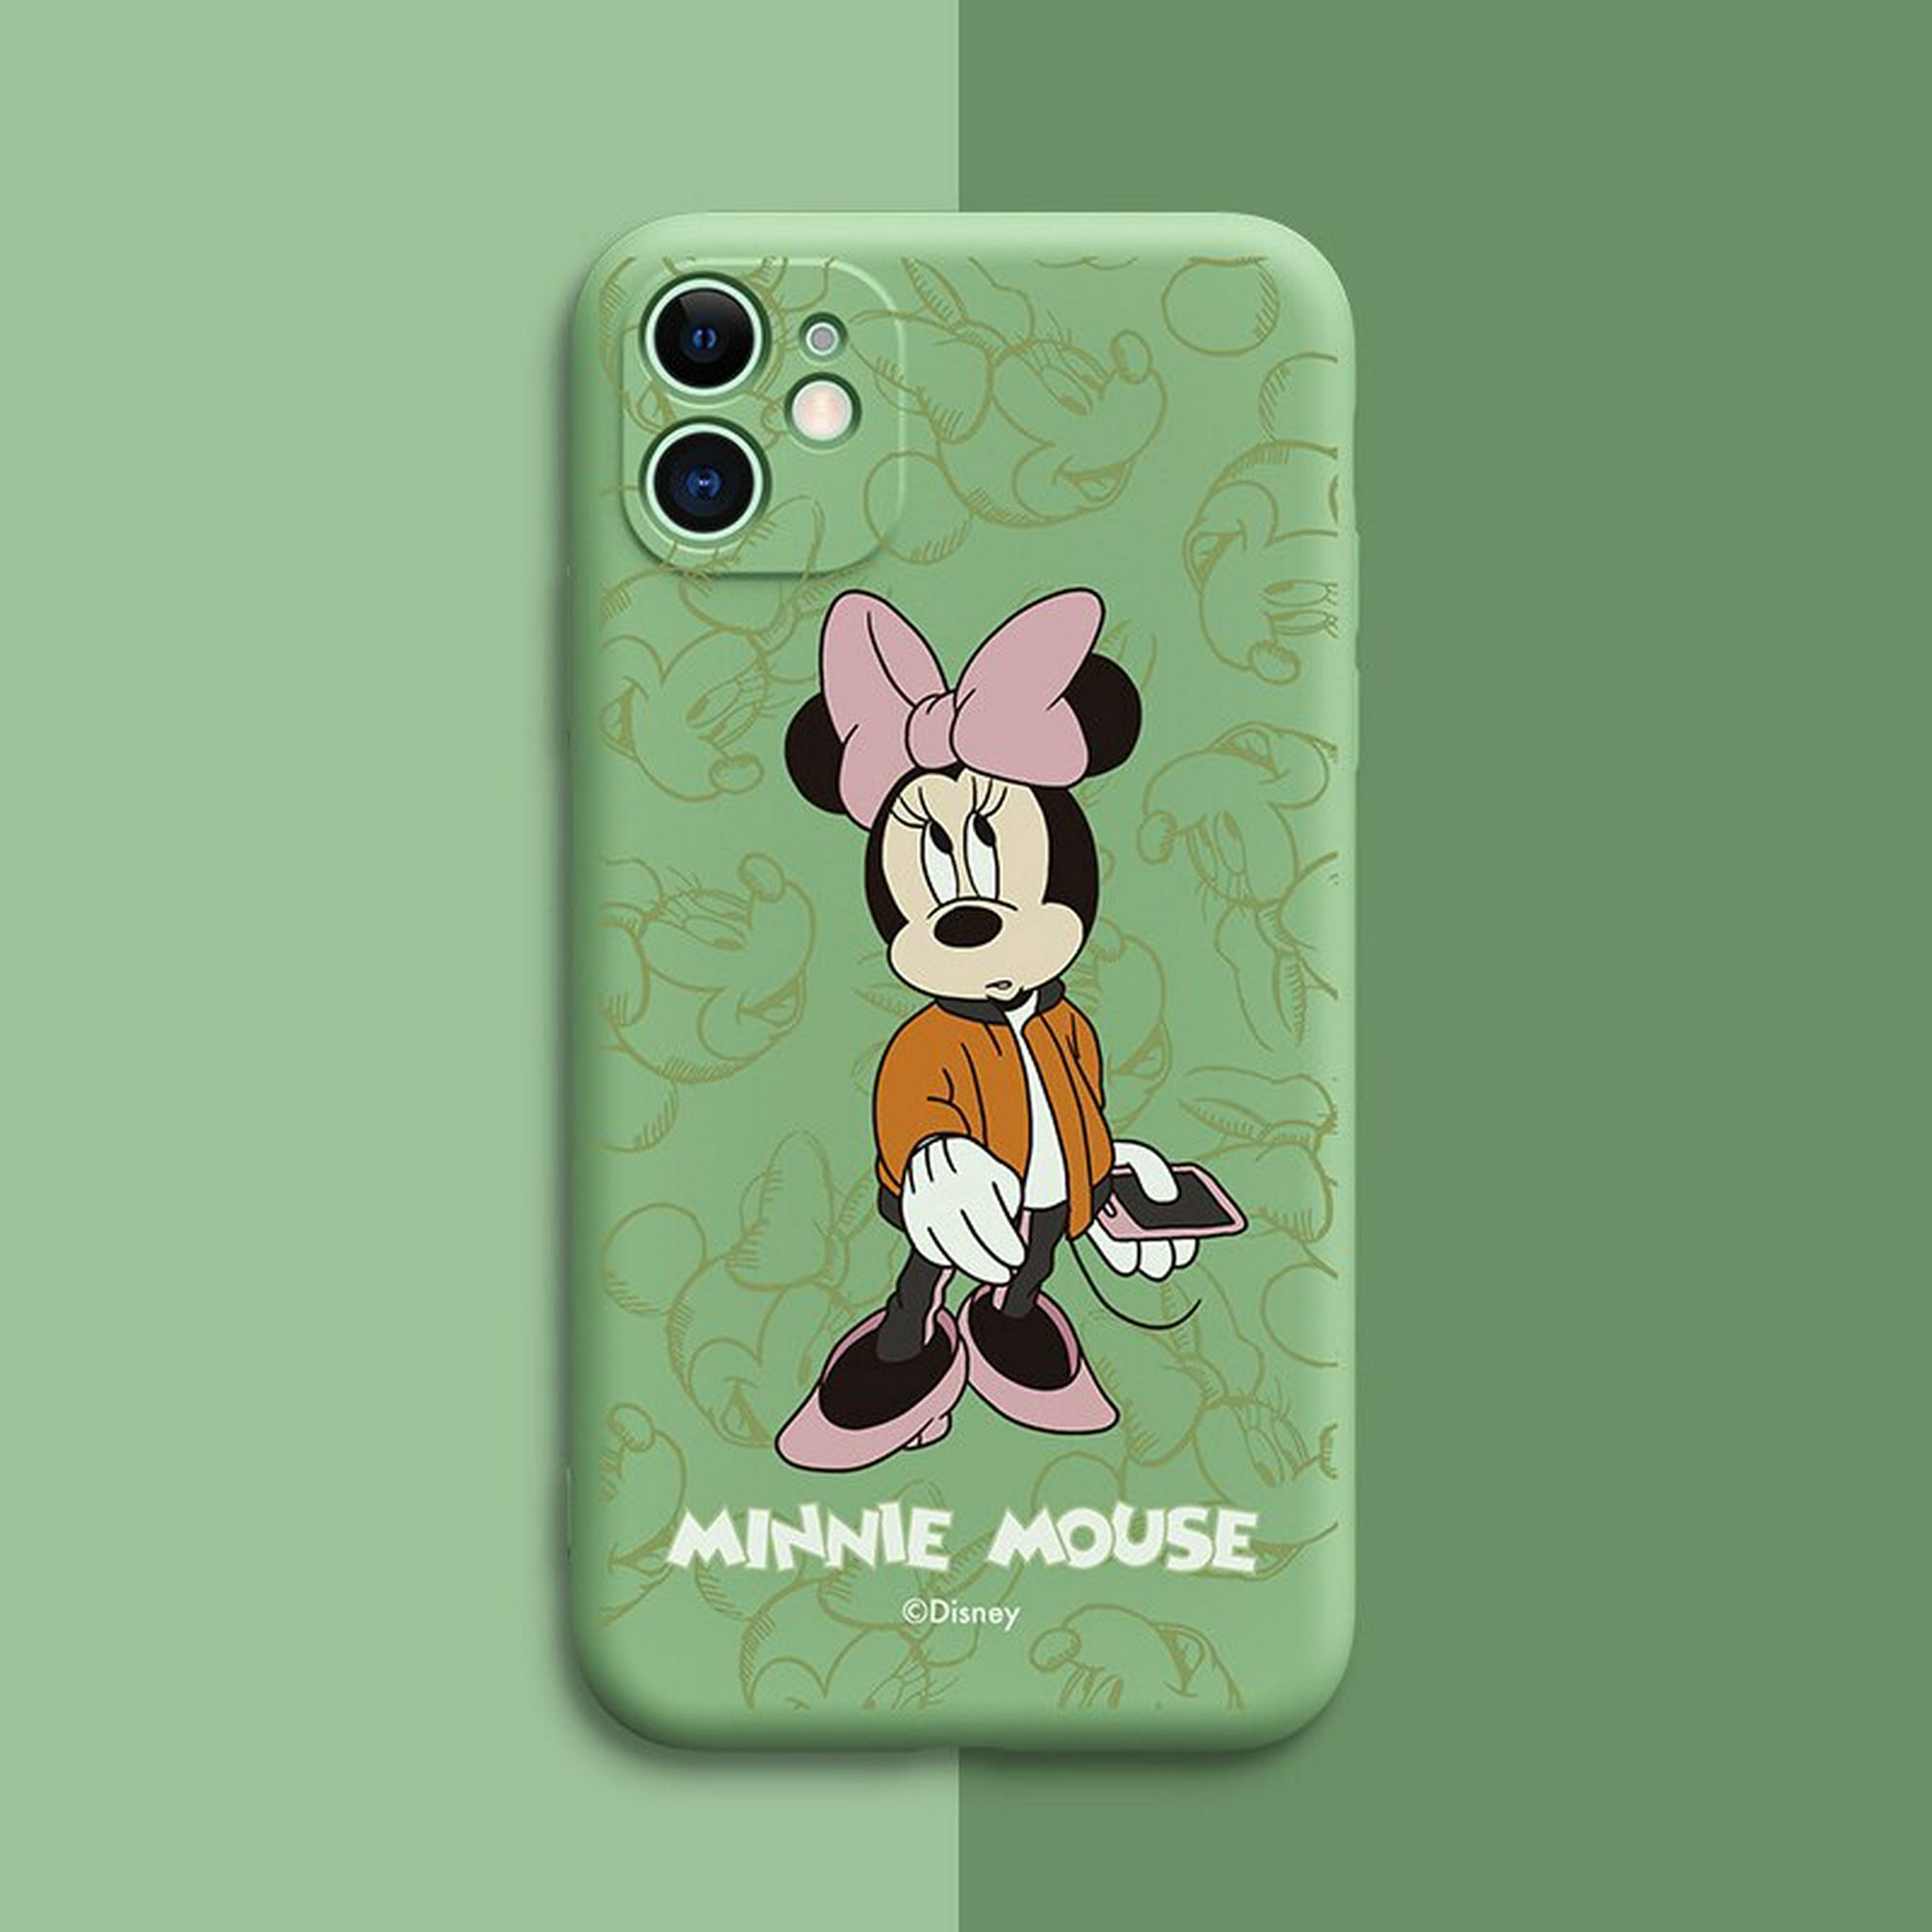 Capa para iPhone 13 Pro Max Oficial da Disney Mickey e Minnie